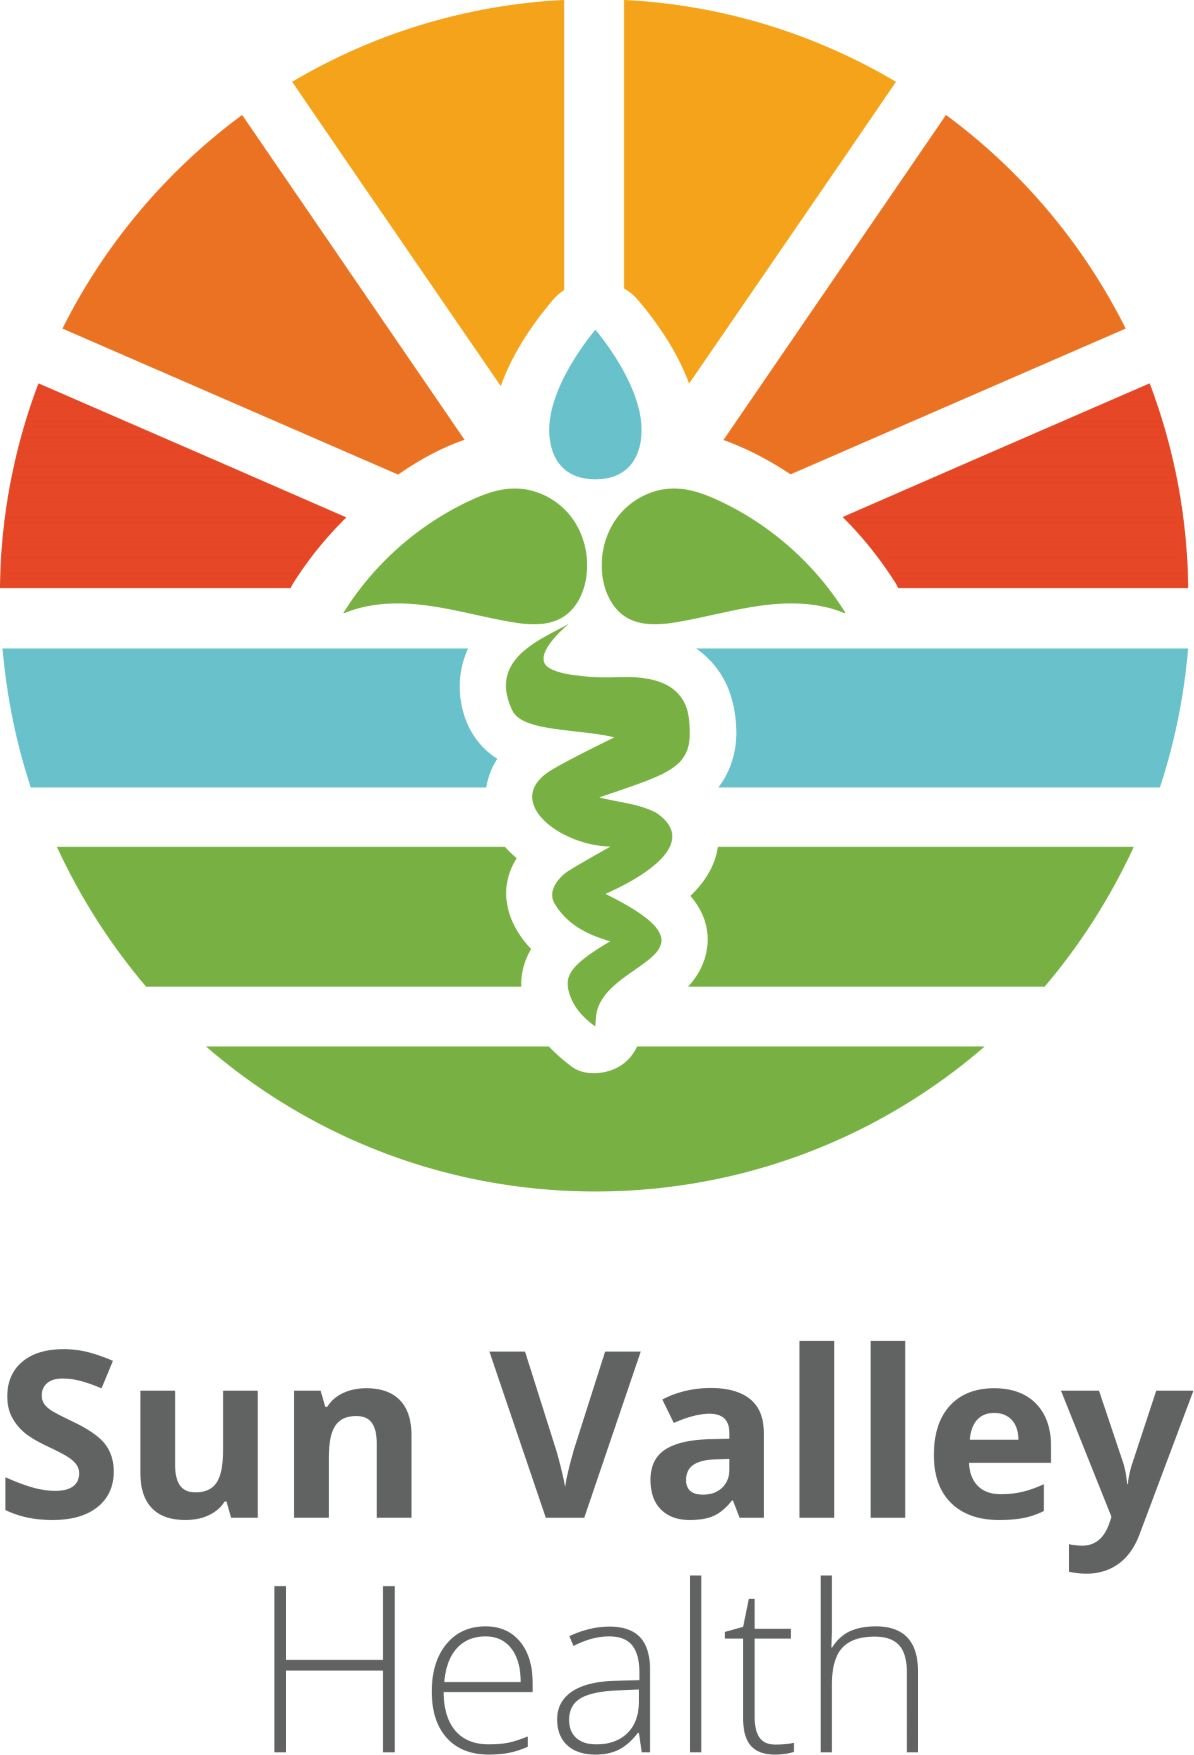 Sun Valley Health Logo.png